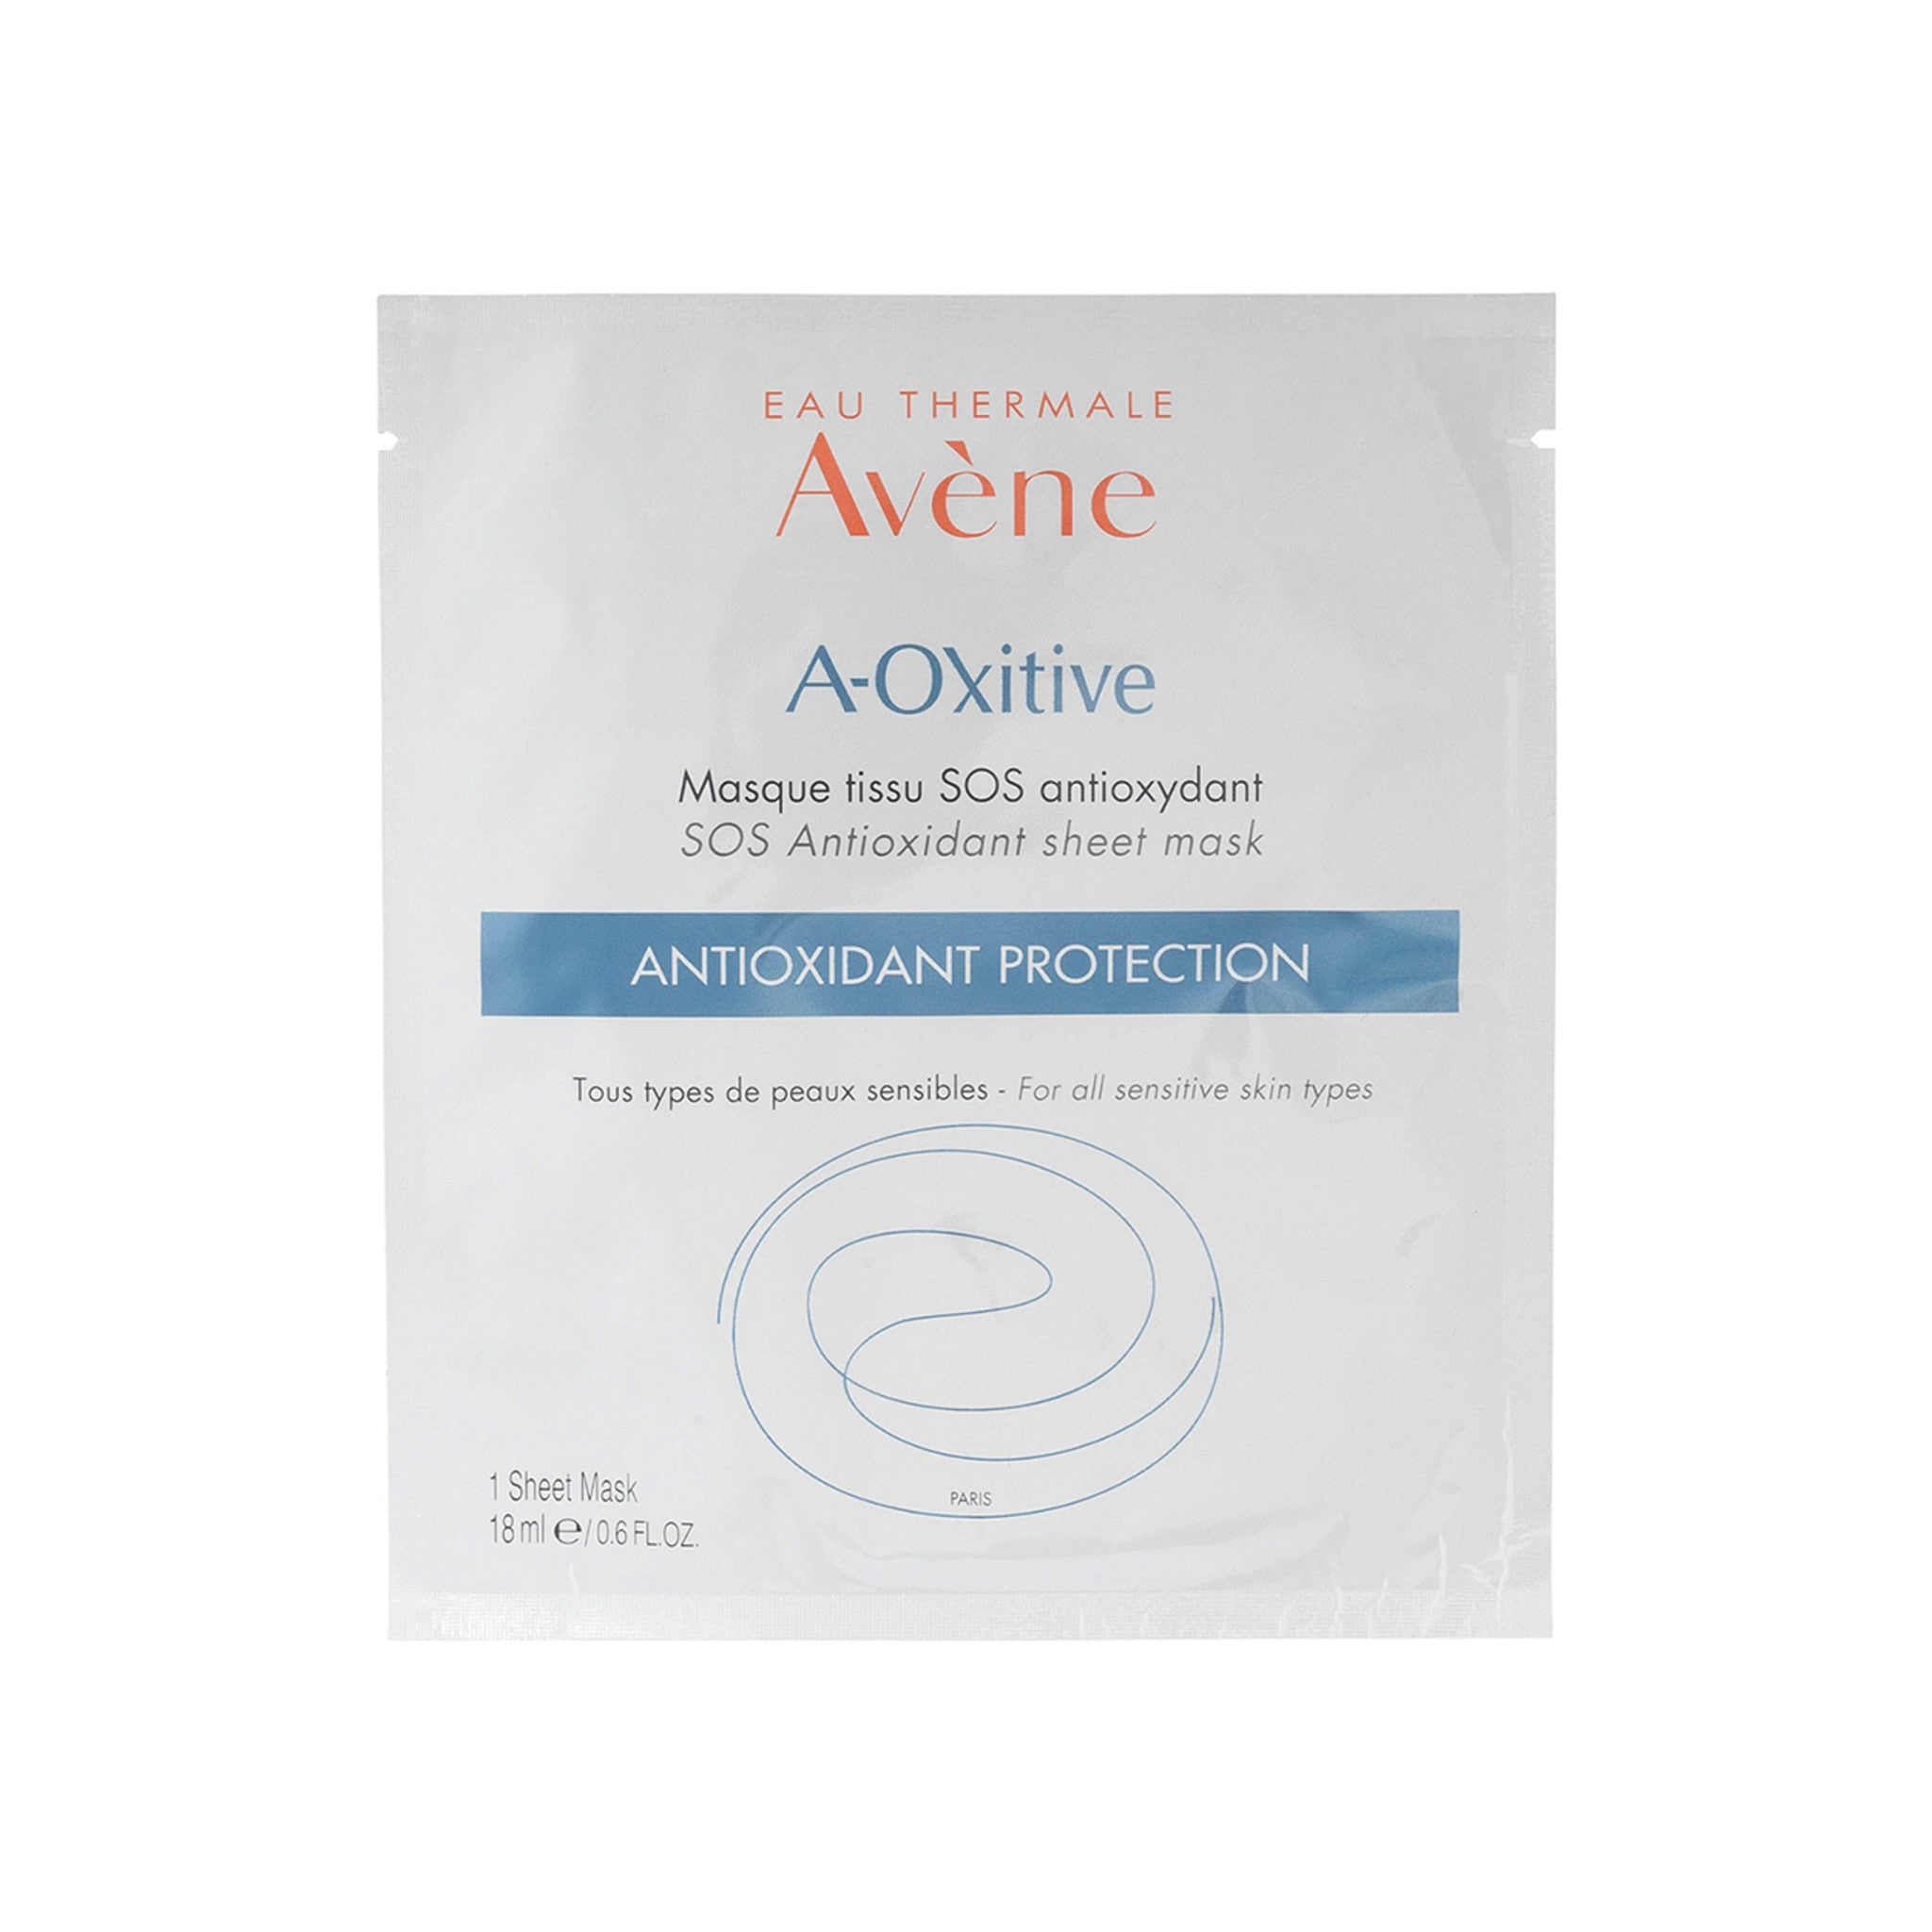 Avène A-OXitive SOS Antioxidant Sheet Mask Size variant: 1 Treatment main image.